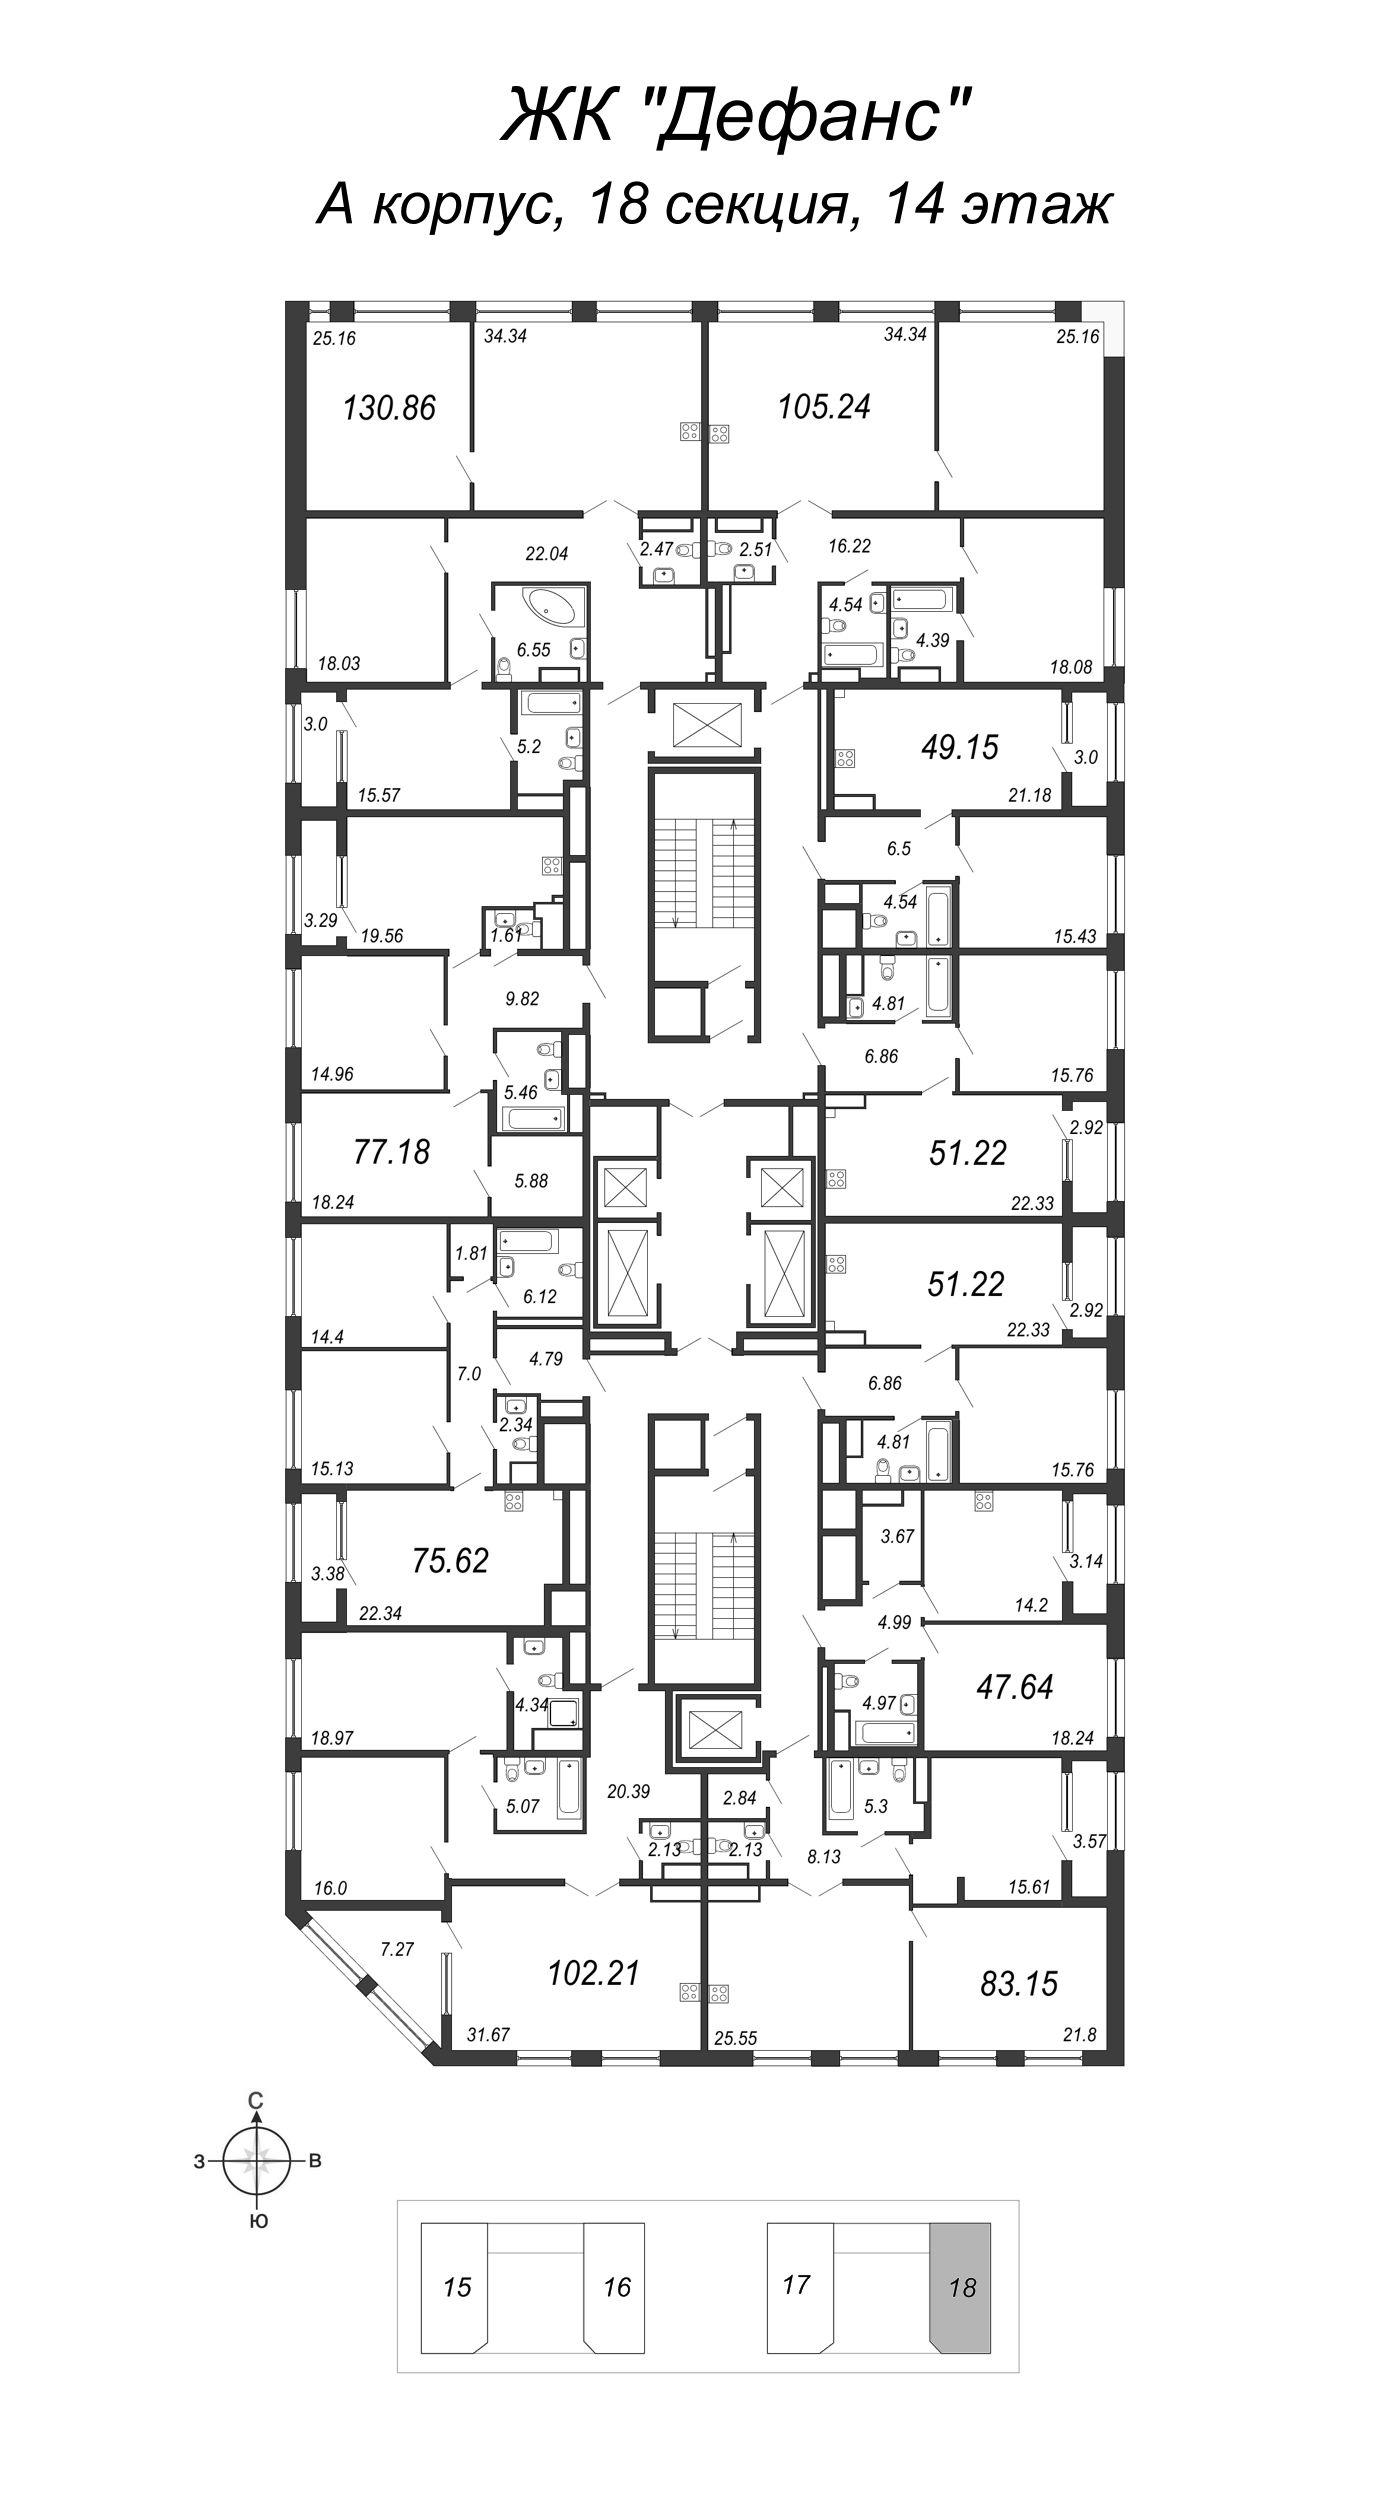 2-комнатная (Евро) квартира, 51.22 м² - планировка этажа